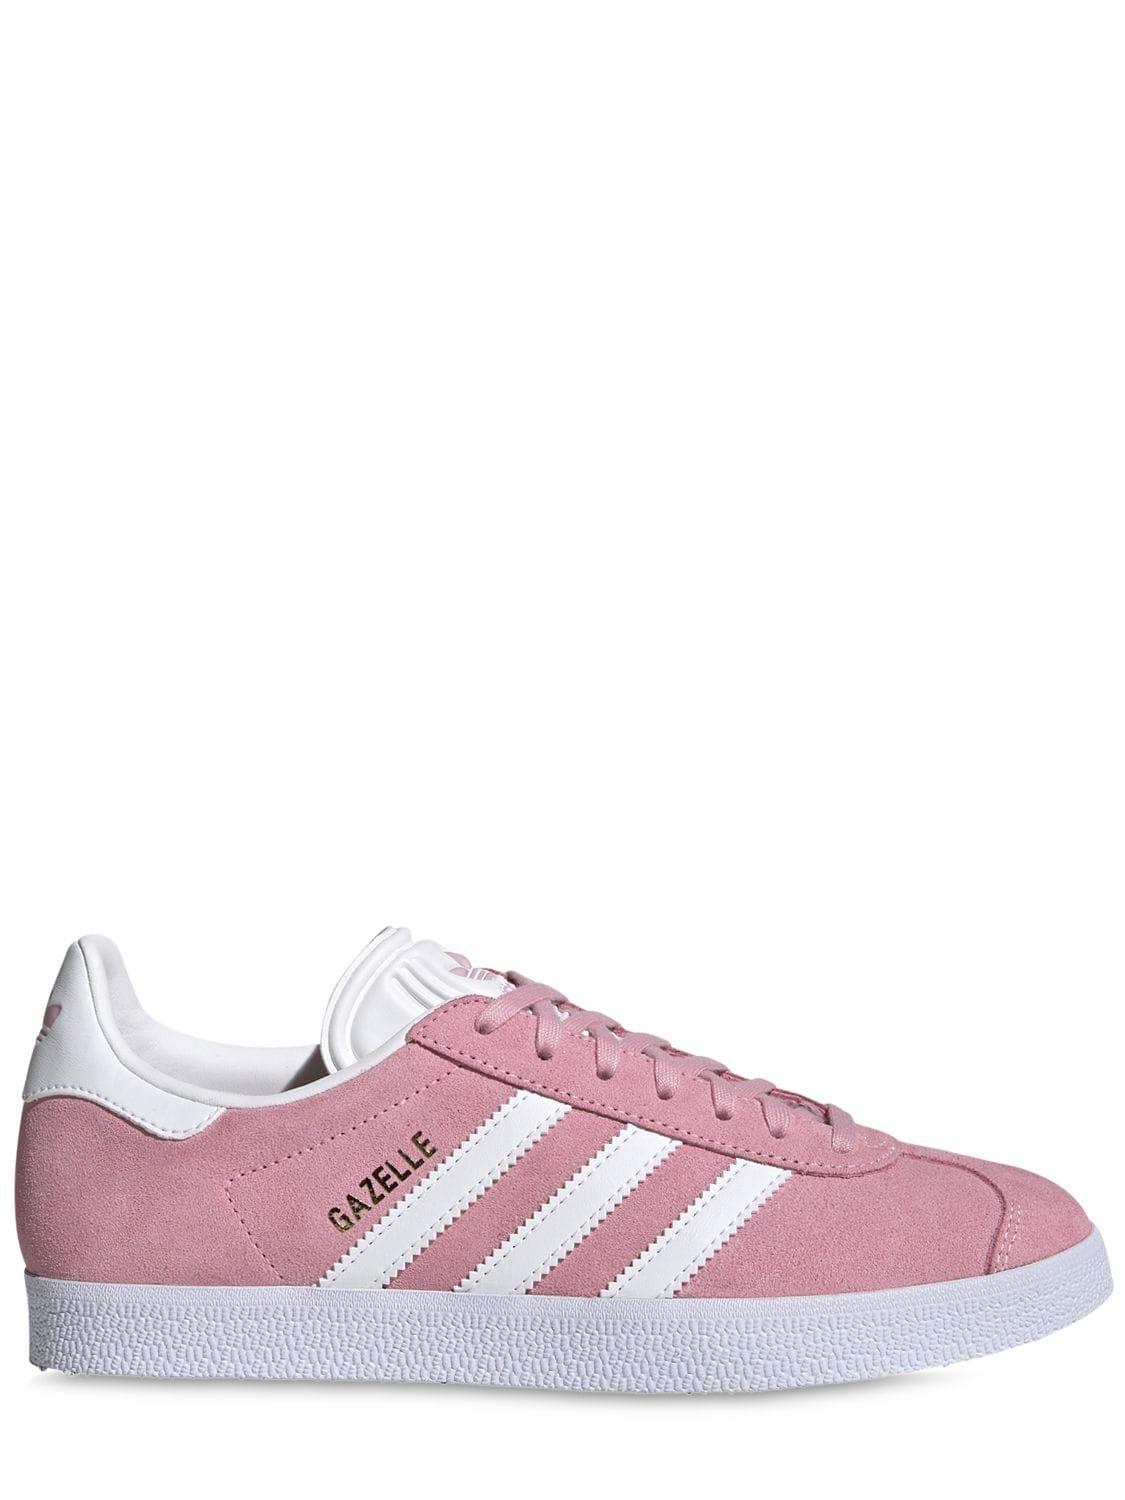 adidas Originals Gazelle Shoes in Pink | Lyst